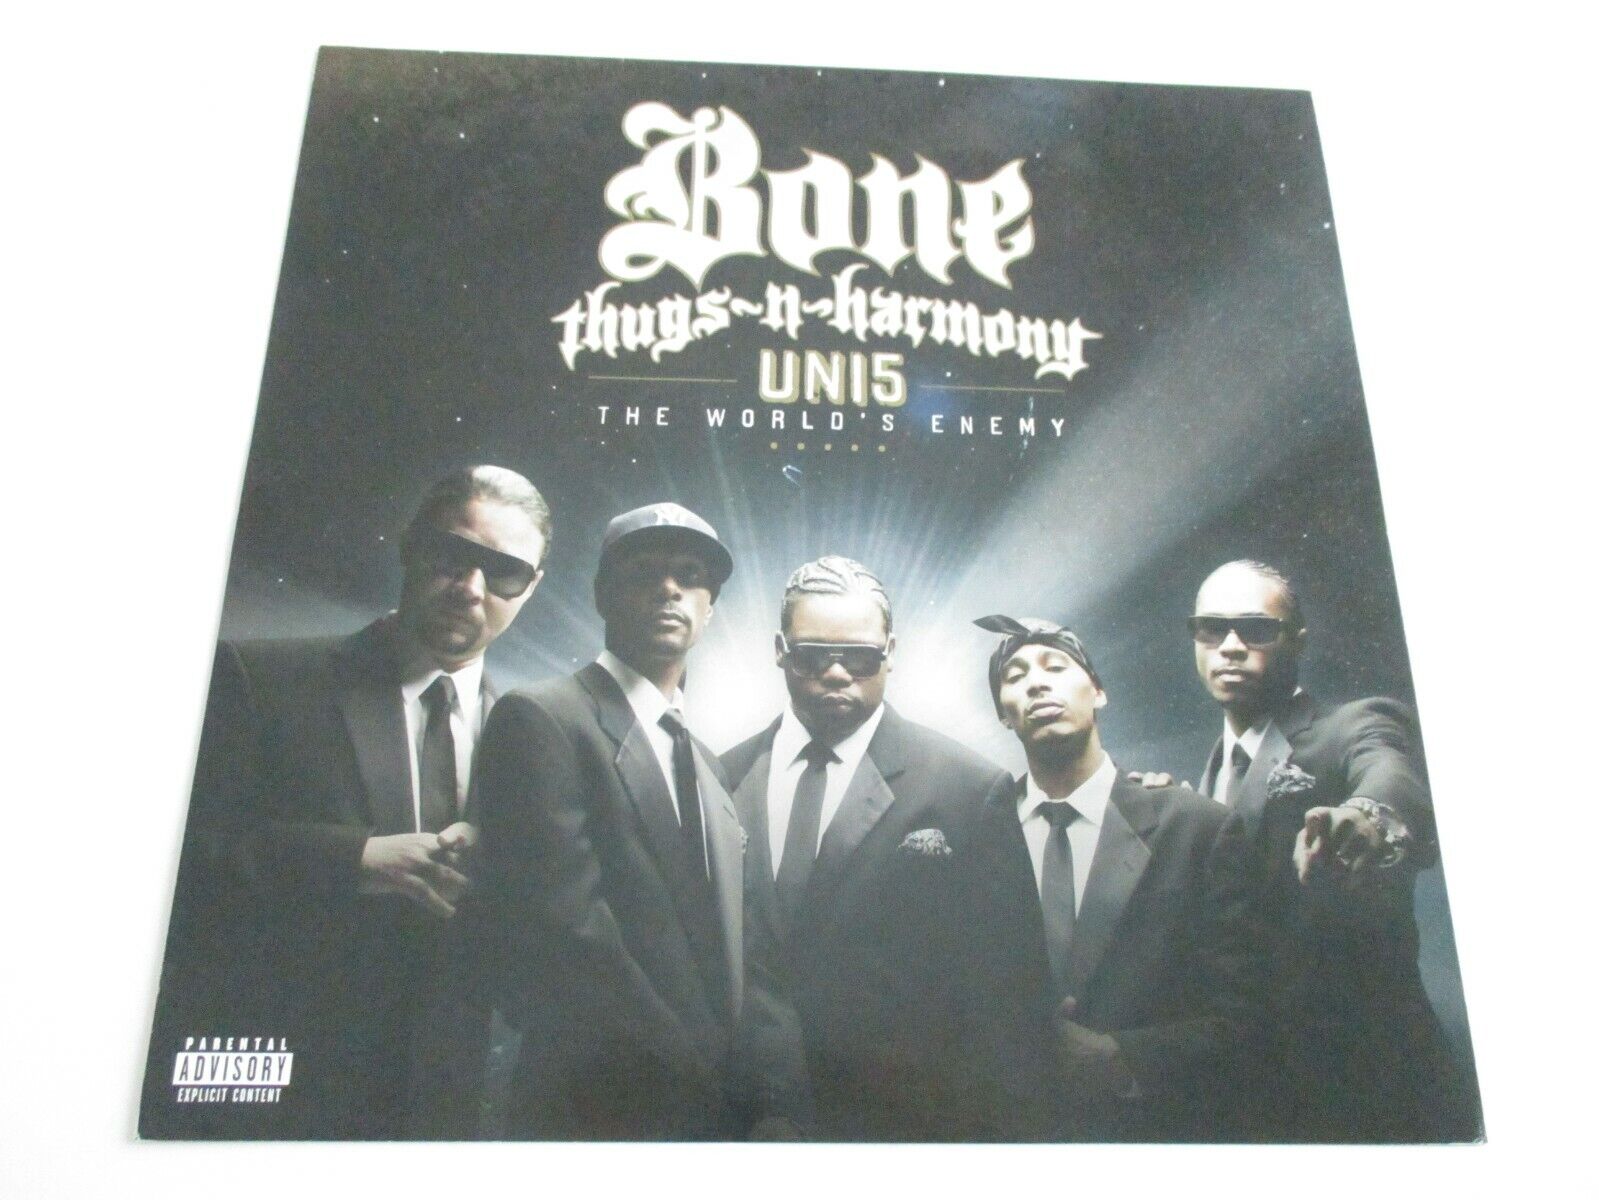 Bone Thugs-n-harmony Uni5 Promotional Album Cover Poster Flat 12x12 2 Sided New